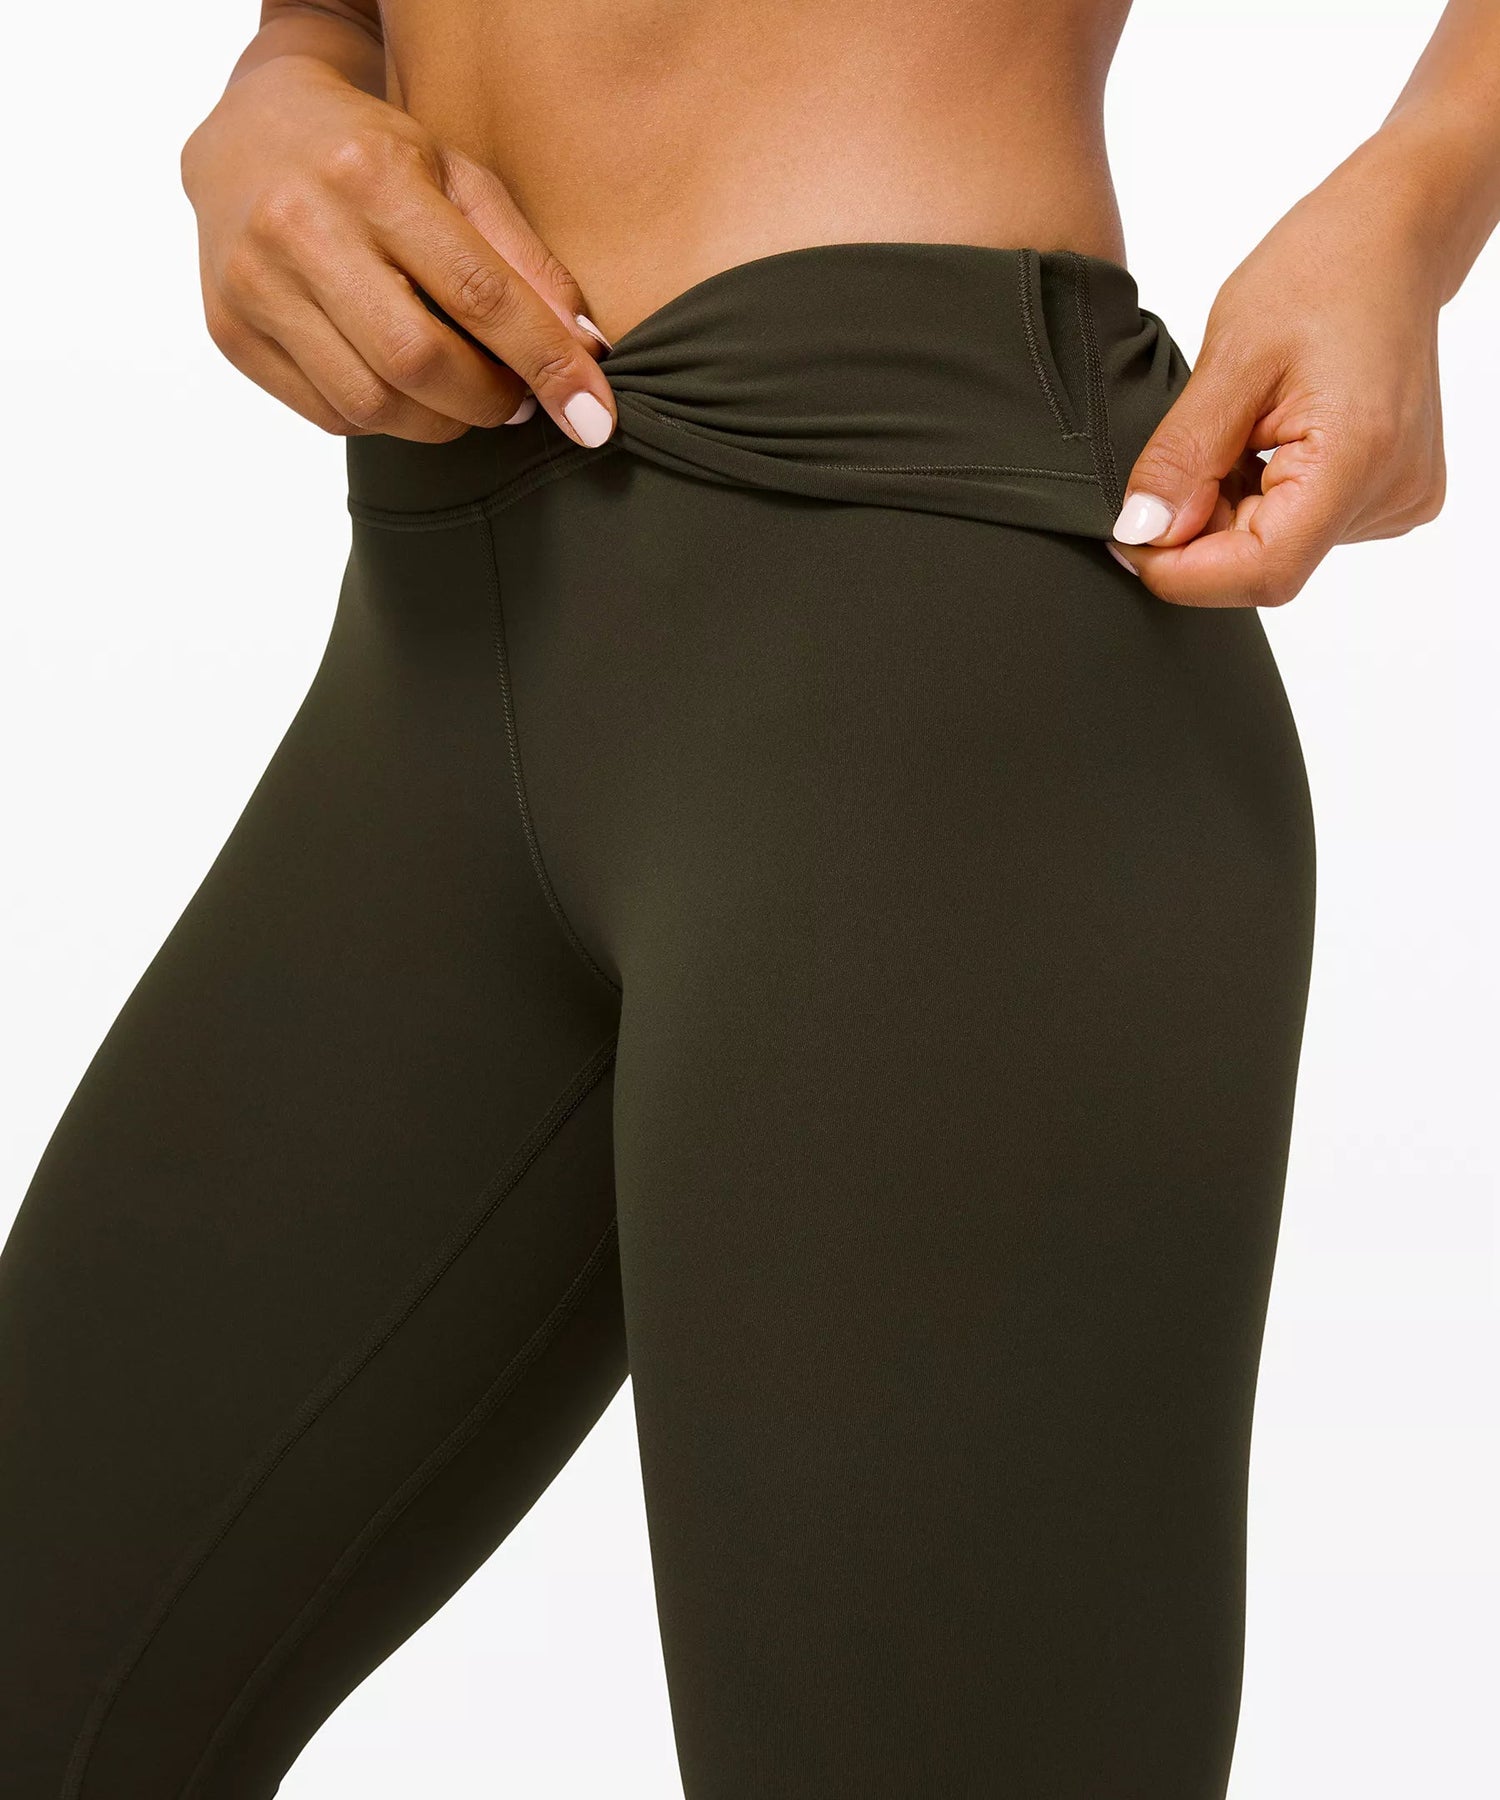 UKAP Ladies Bottoms Elastic Waisted Yoga Pants High Waist Leggings Tummy  Control Workout Jeggings Wine Red XXL 